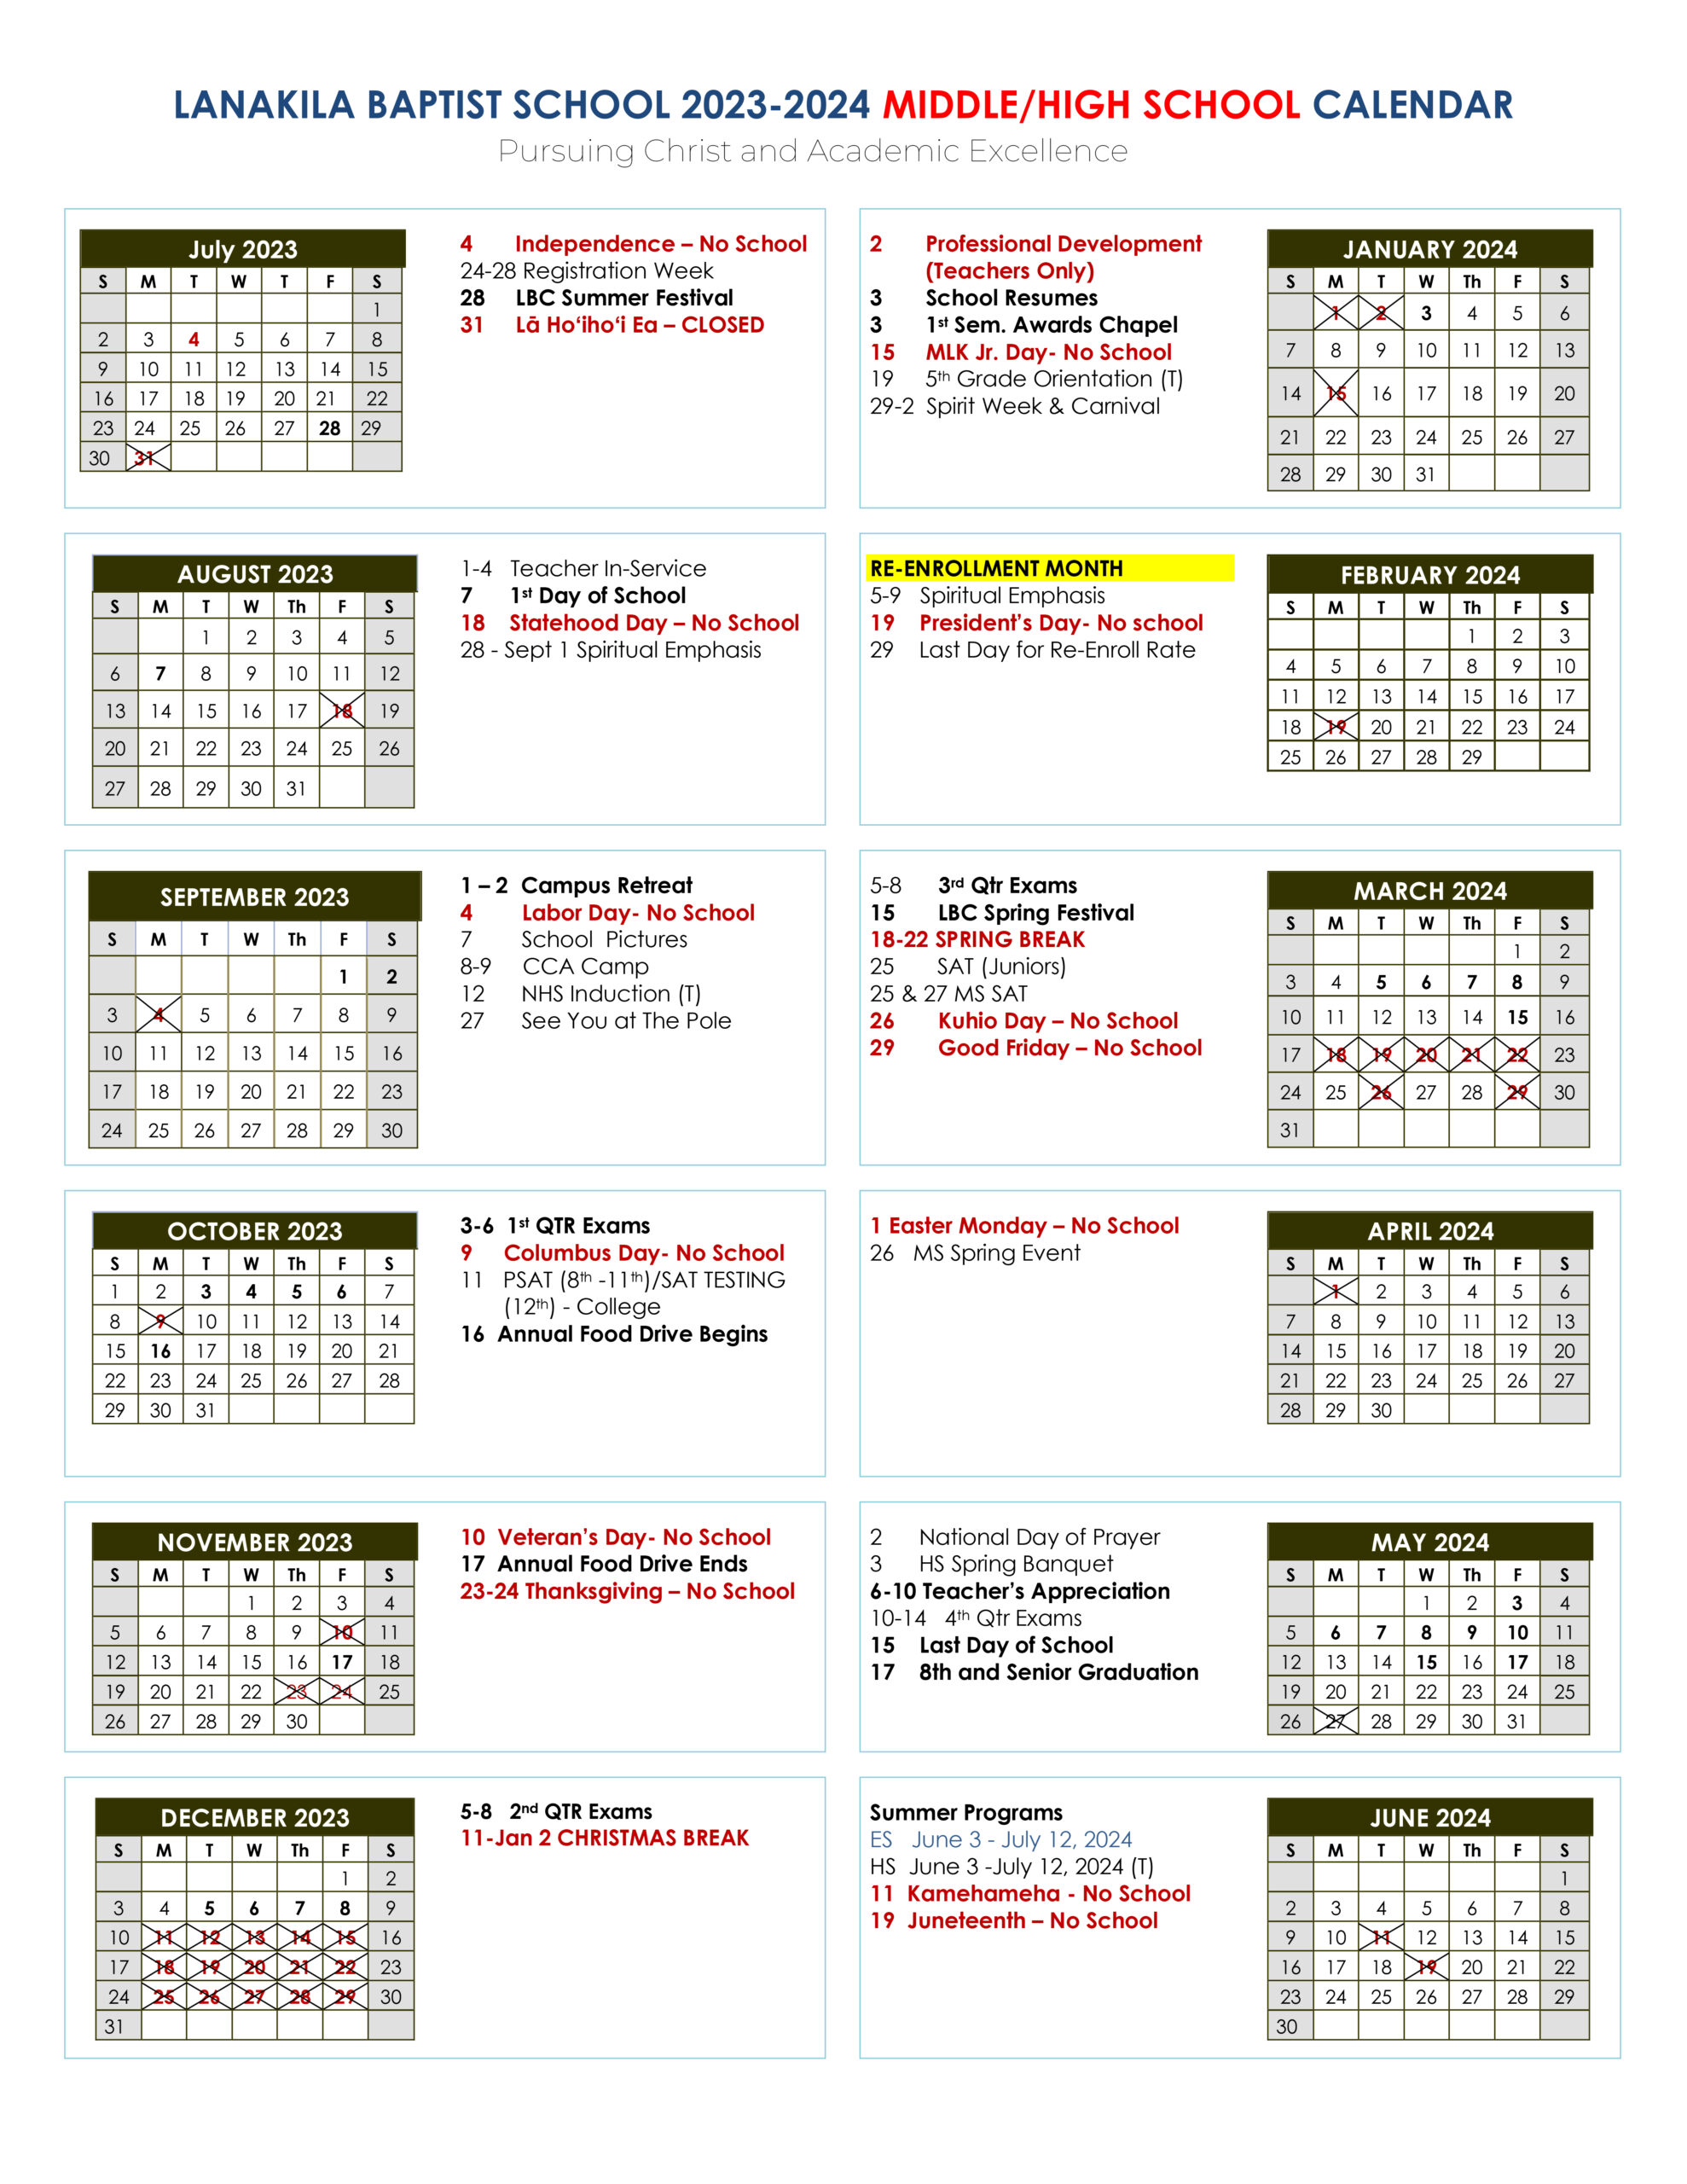 School Calendar Lanakila Baptist Schools